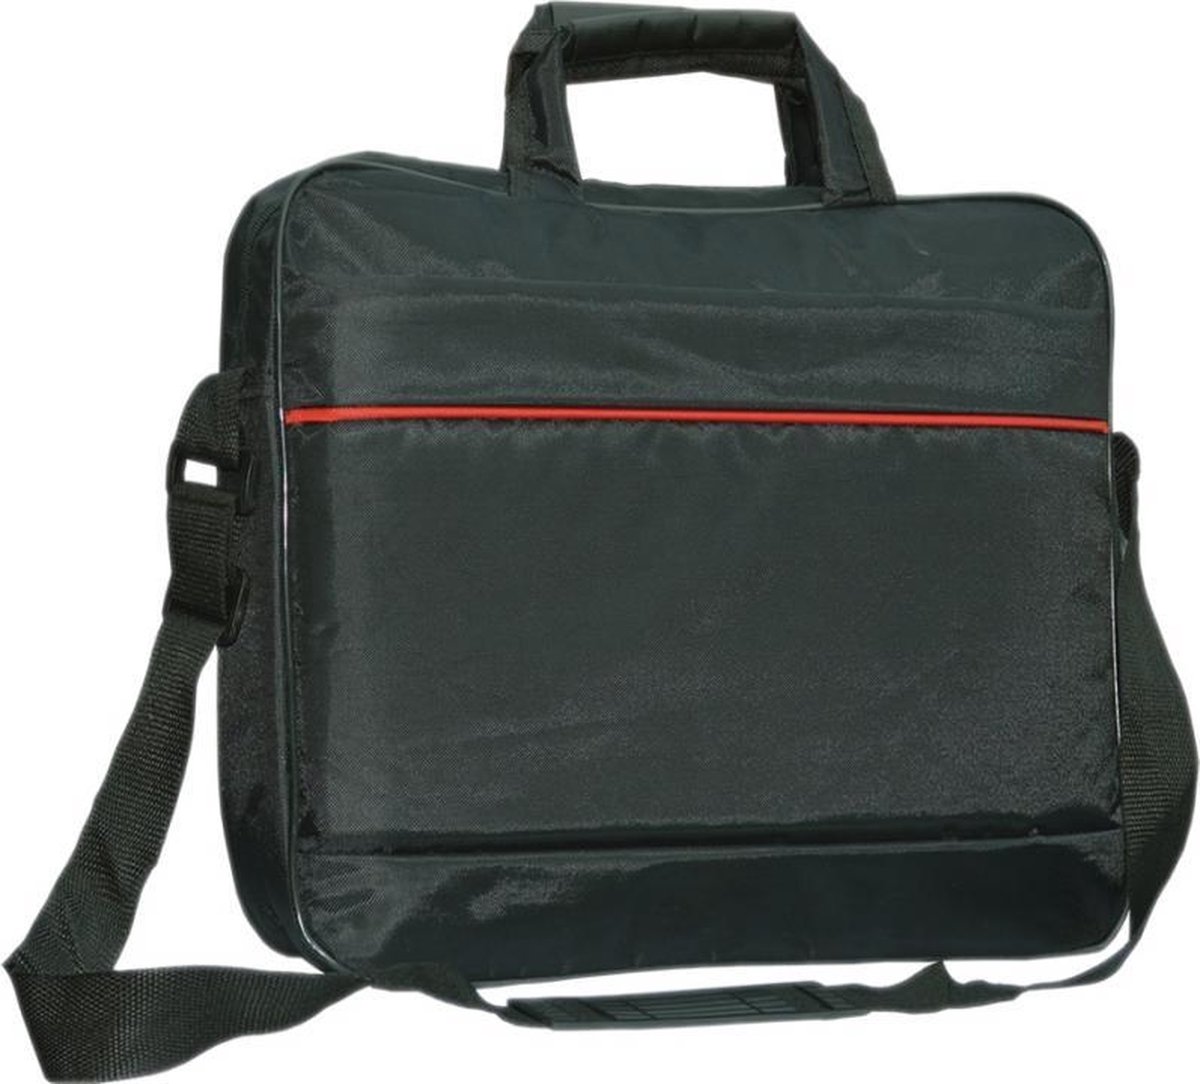 Apple Ipad Pro laptoptas messenger bag / schoudertas / tas , zwart , merk i12Cover